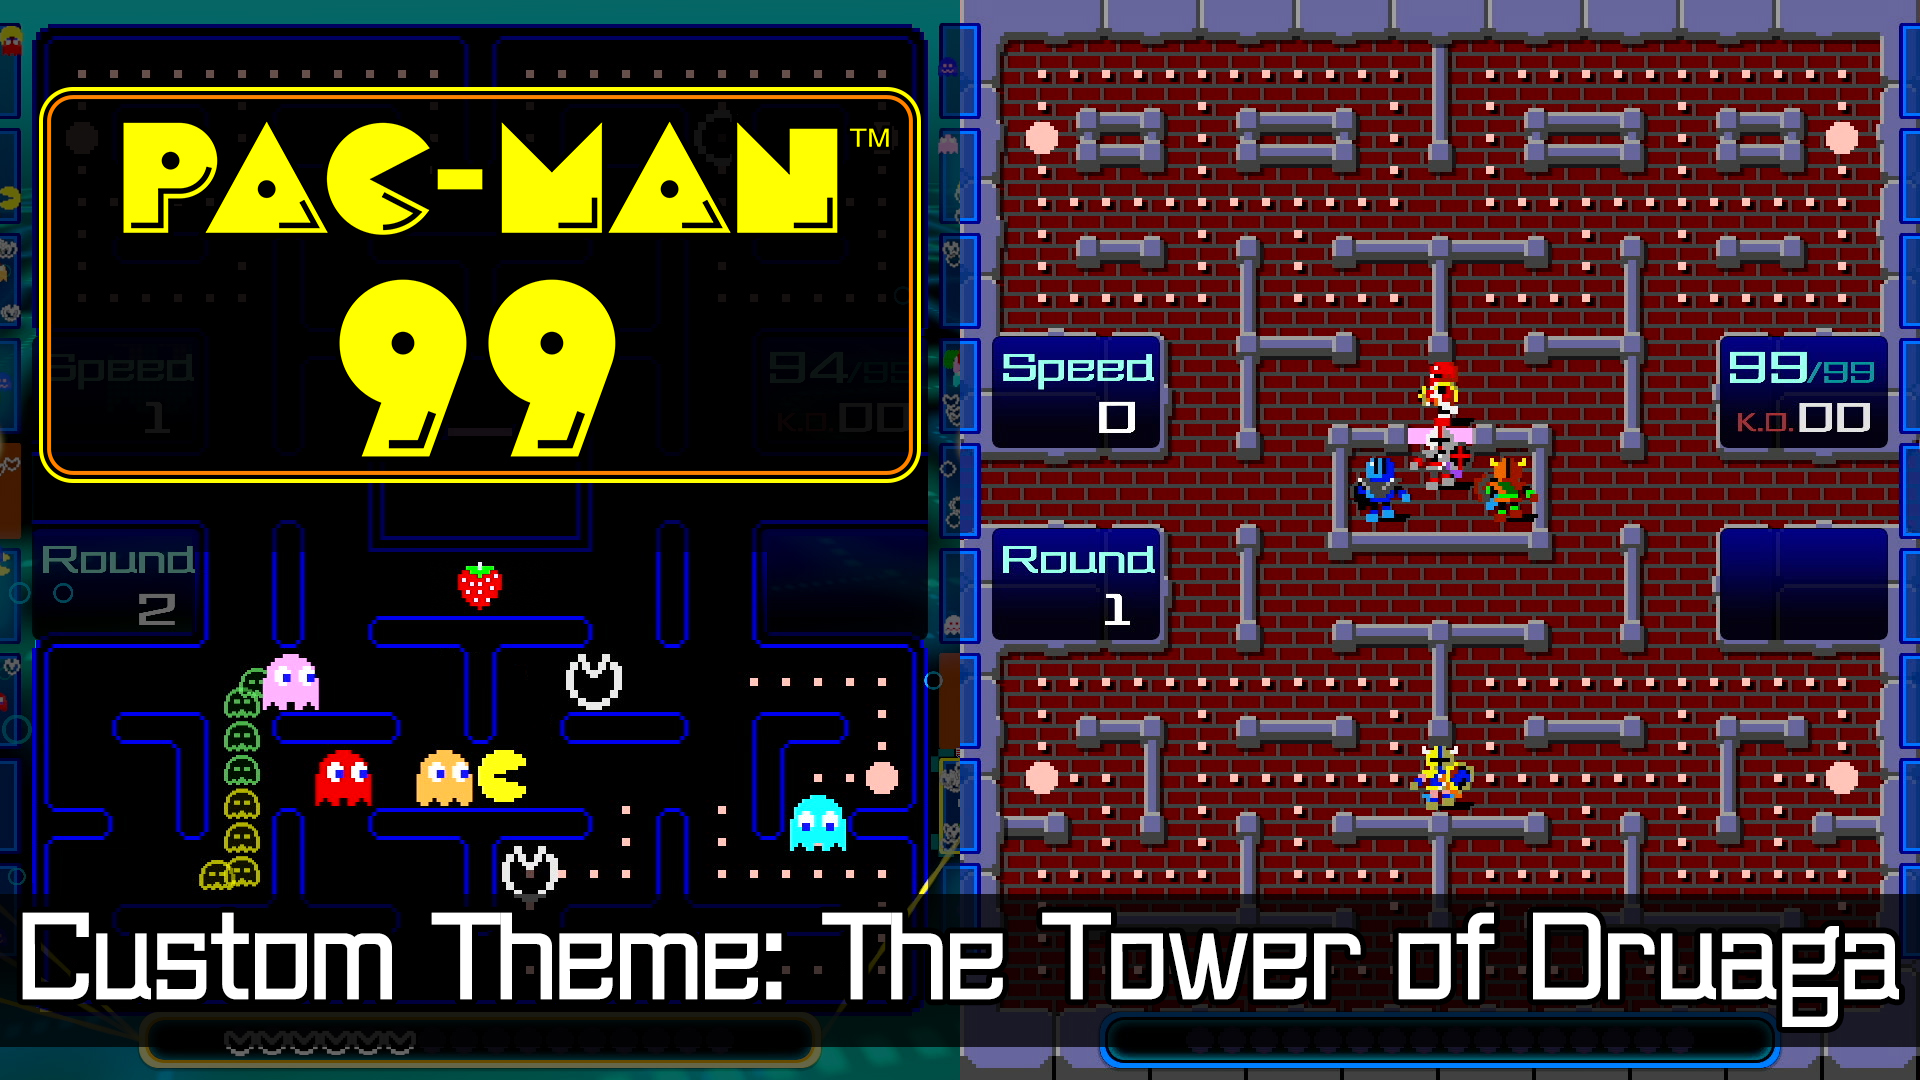 PAC-MAN 99 Custom Theme: The Tower of Druaga